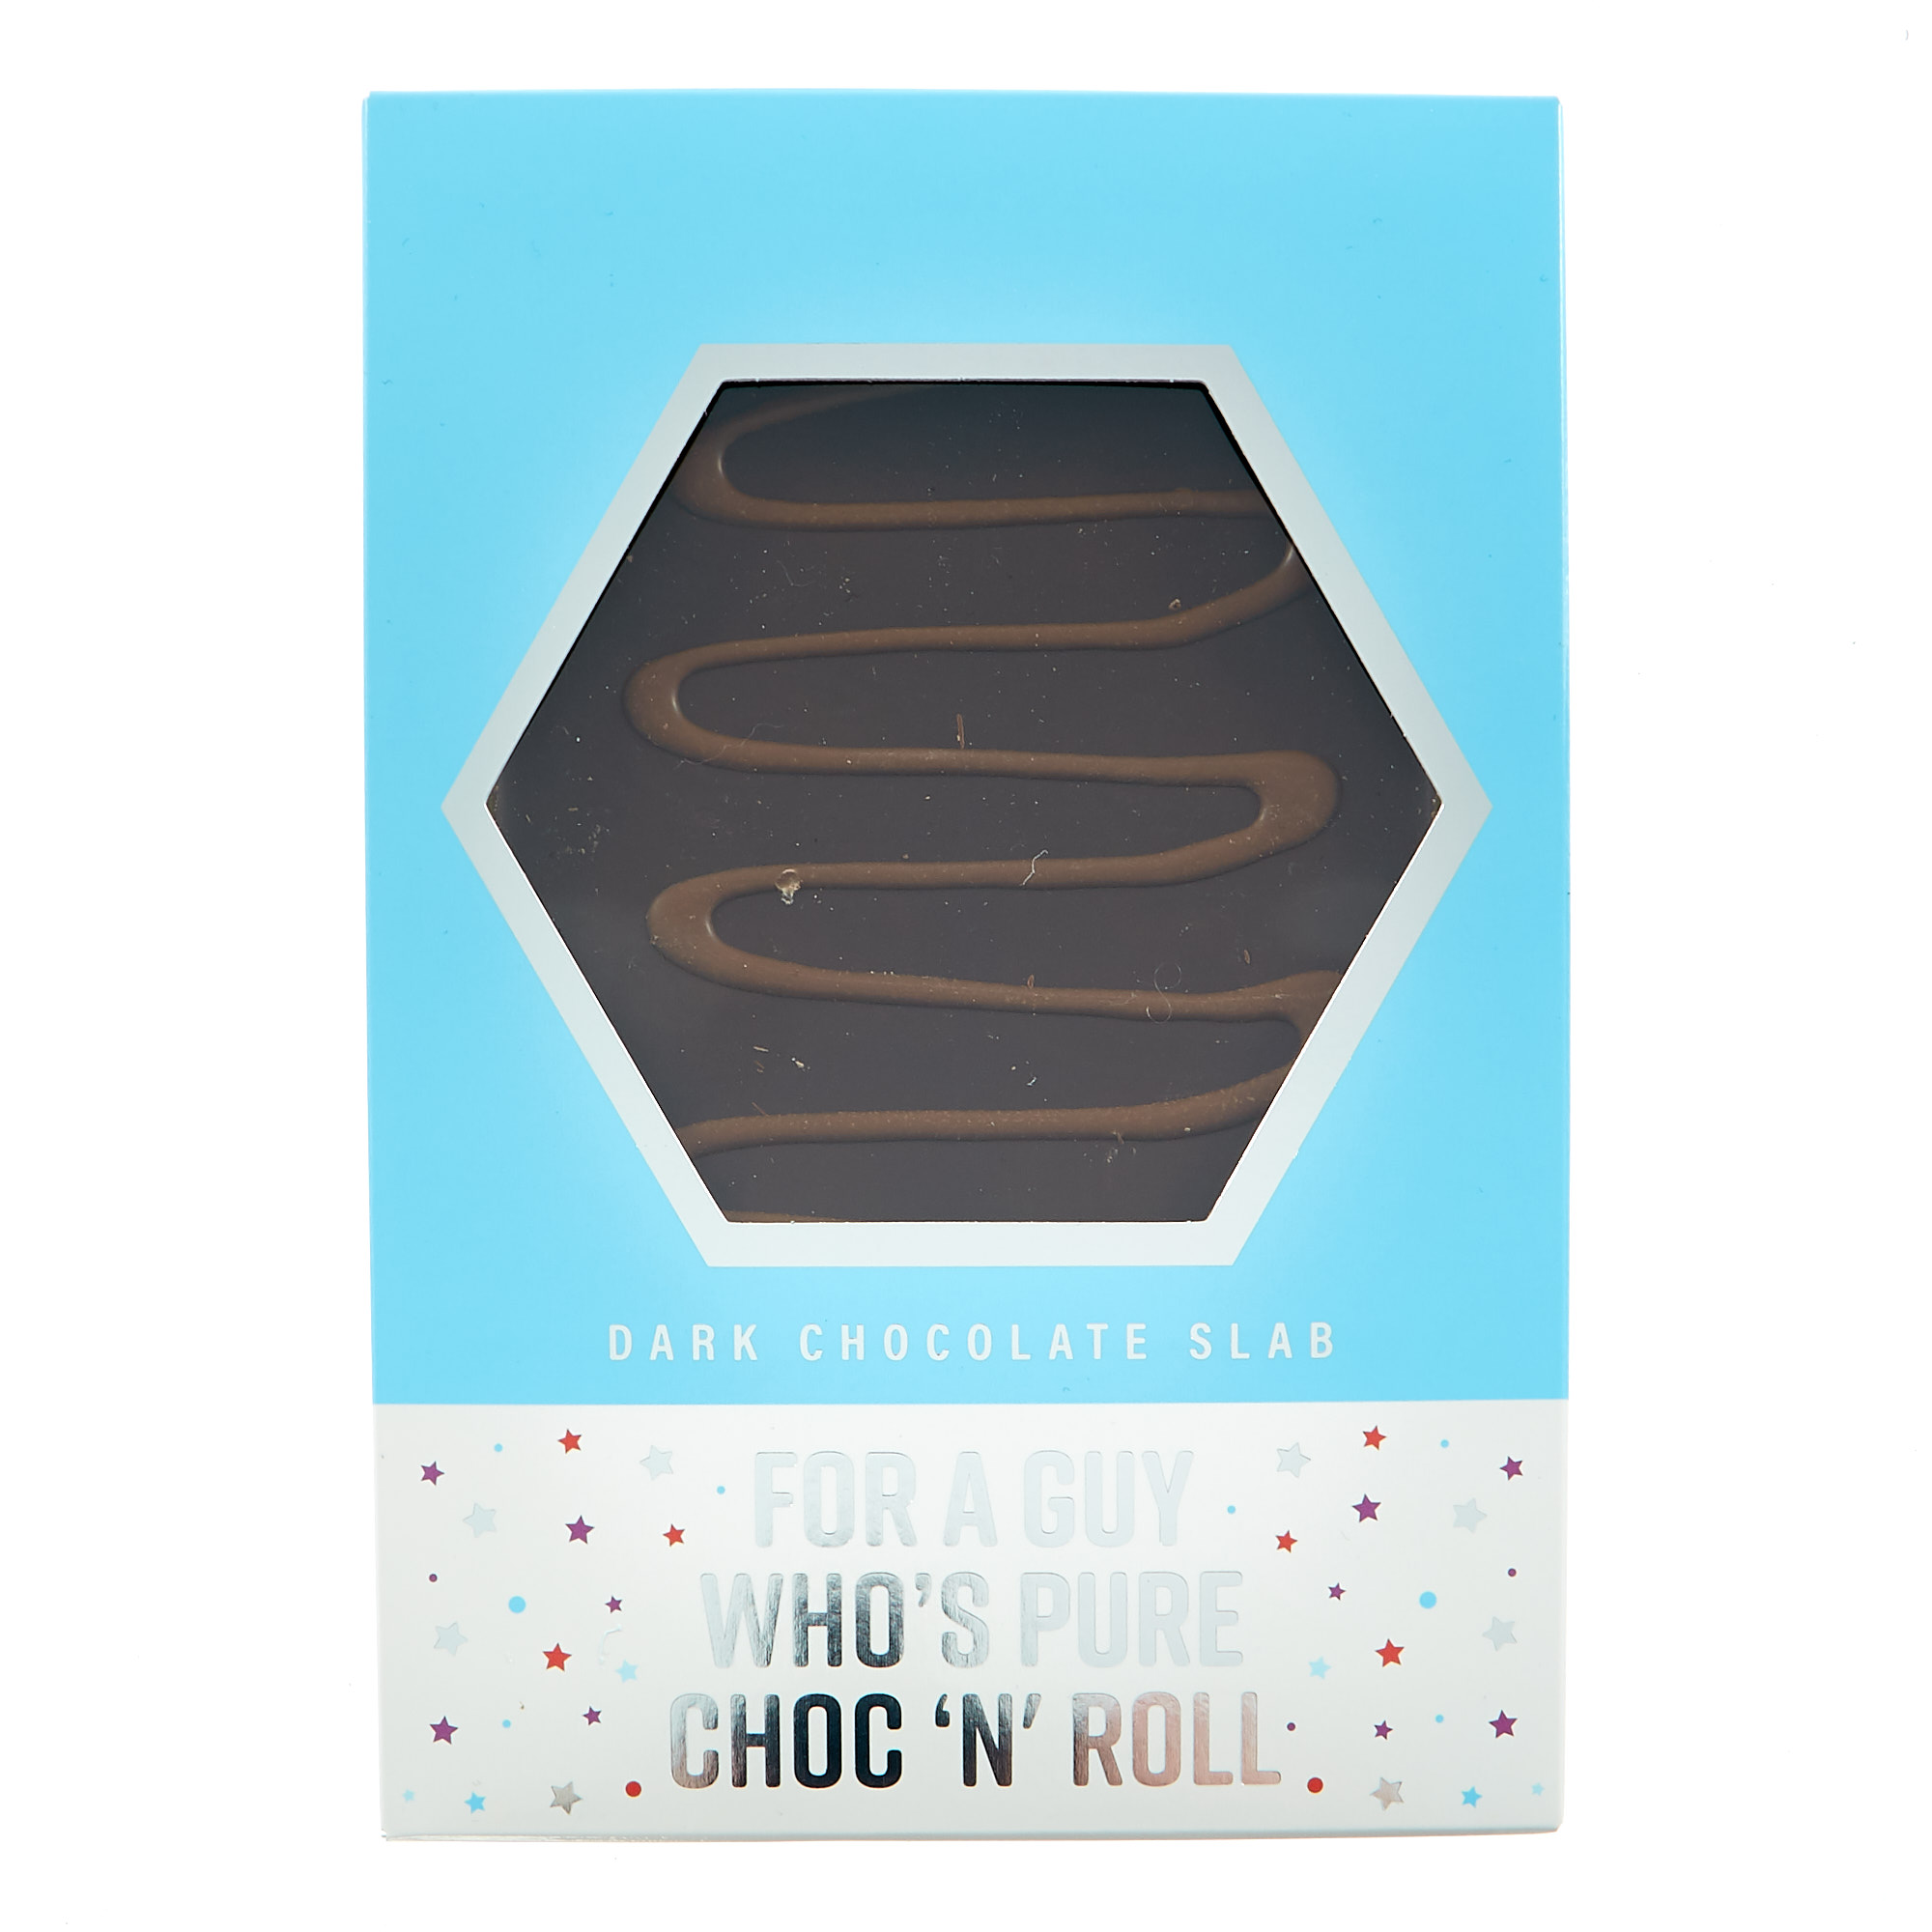 Dark Chocolate Slab - For A Guy Who's Pure Choc 'n' Roll